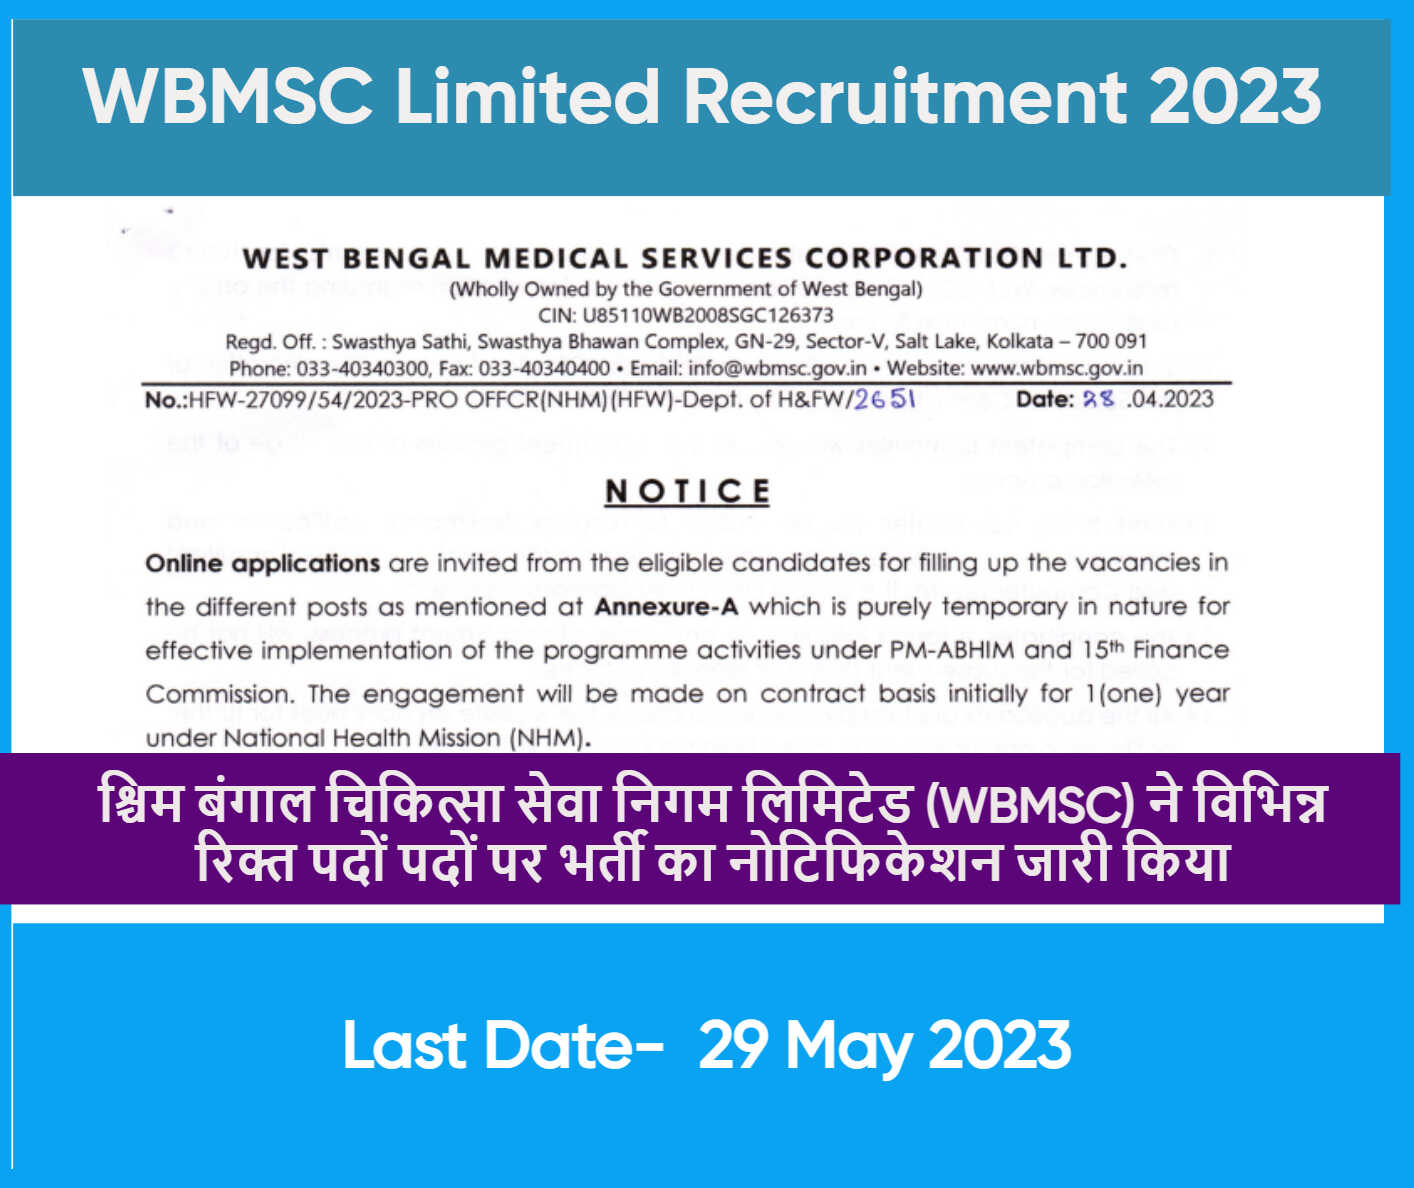 WBMSC Limited Recruitment 2023